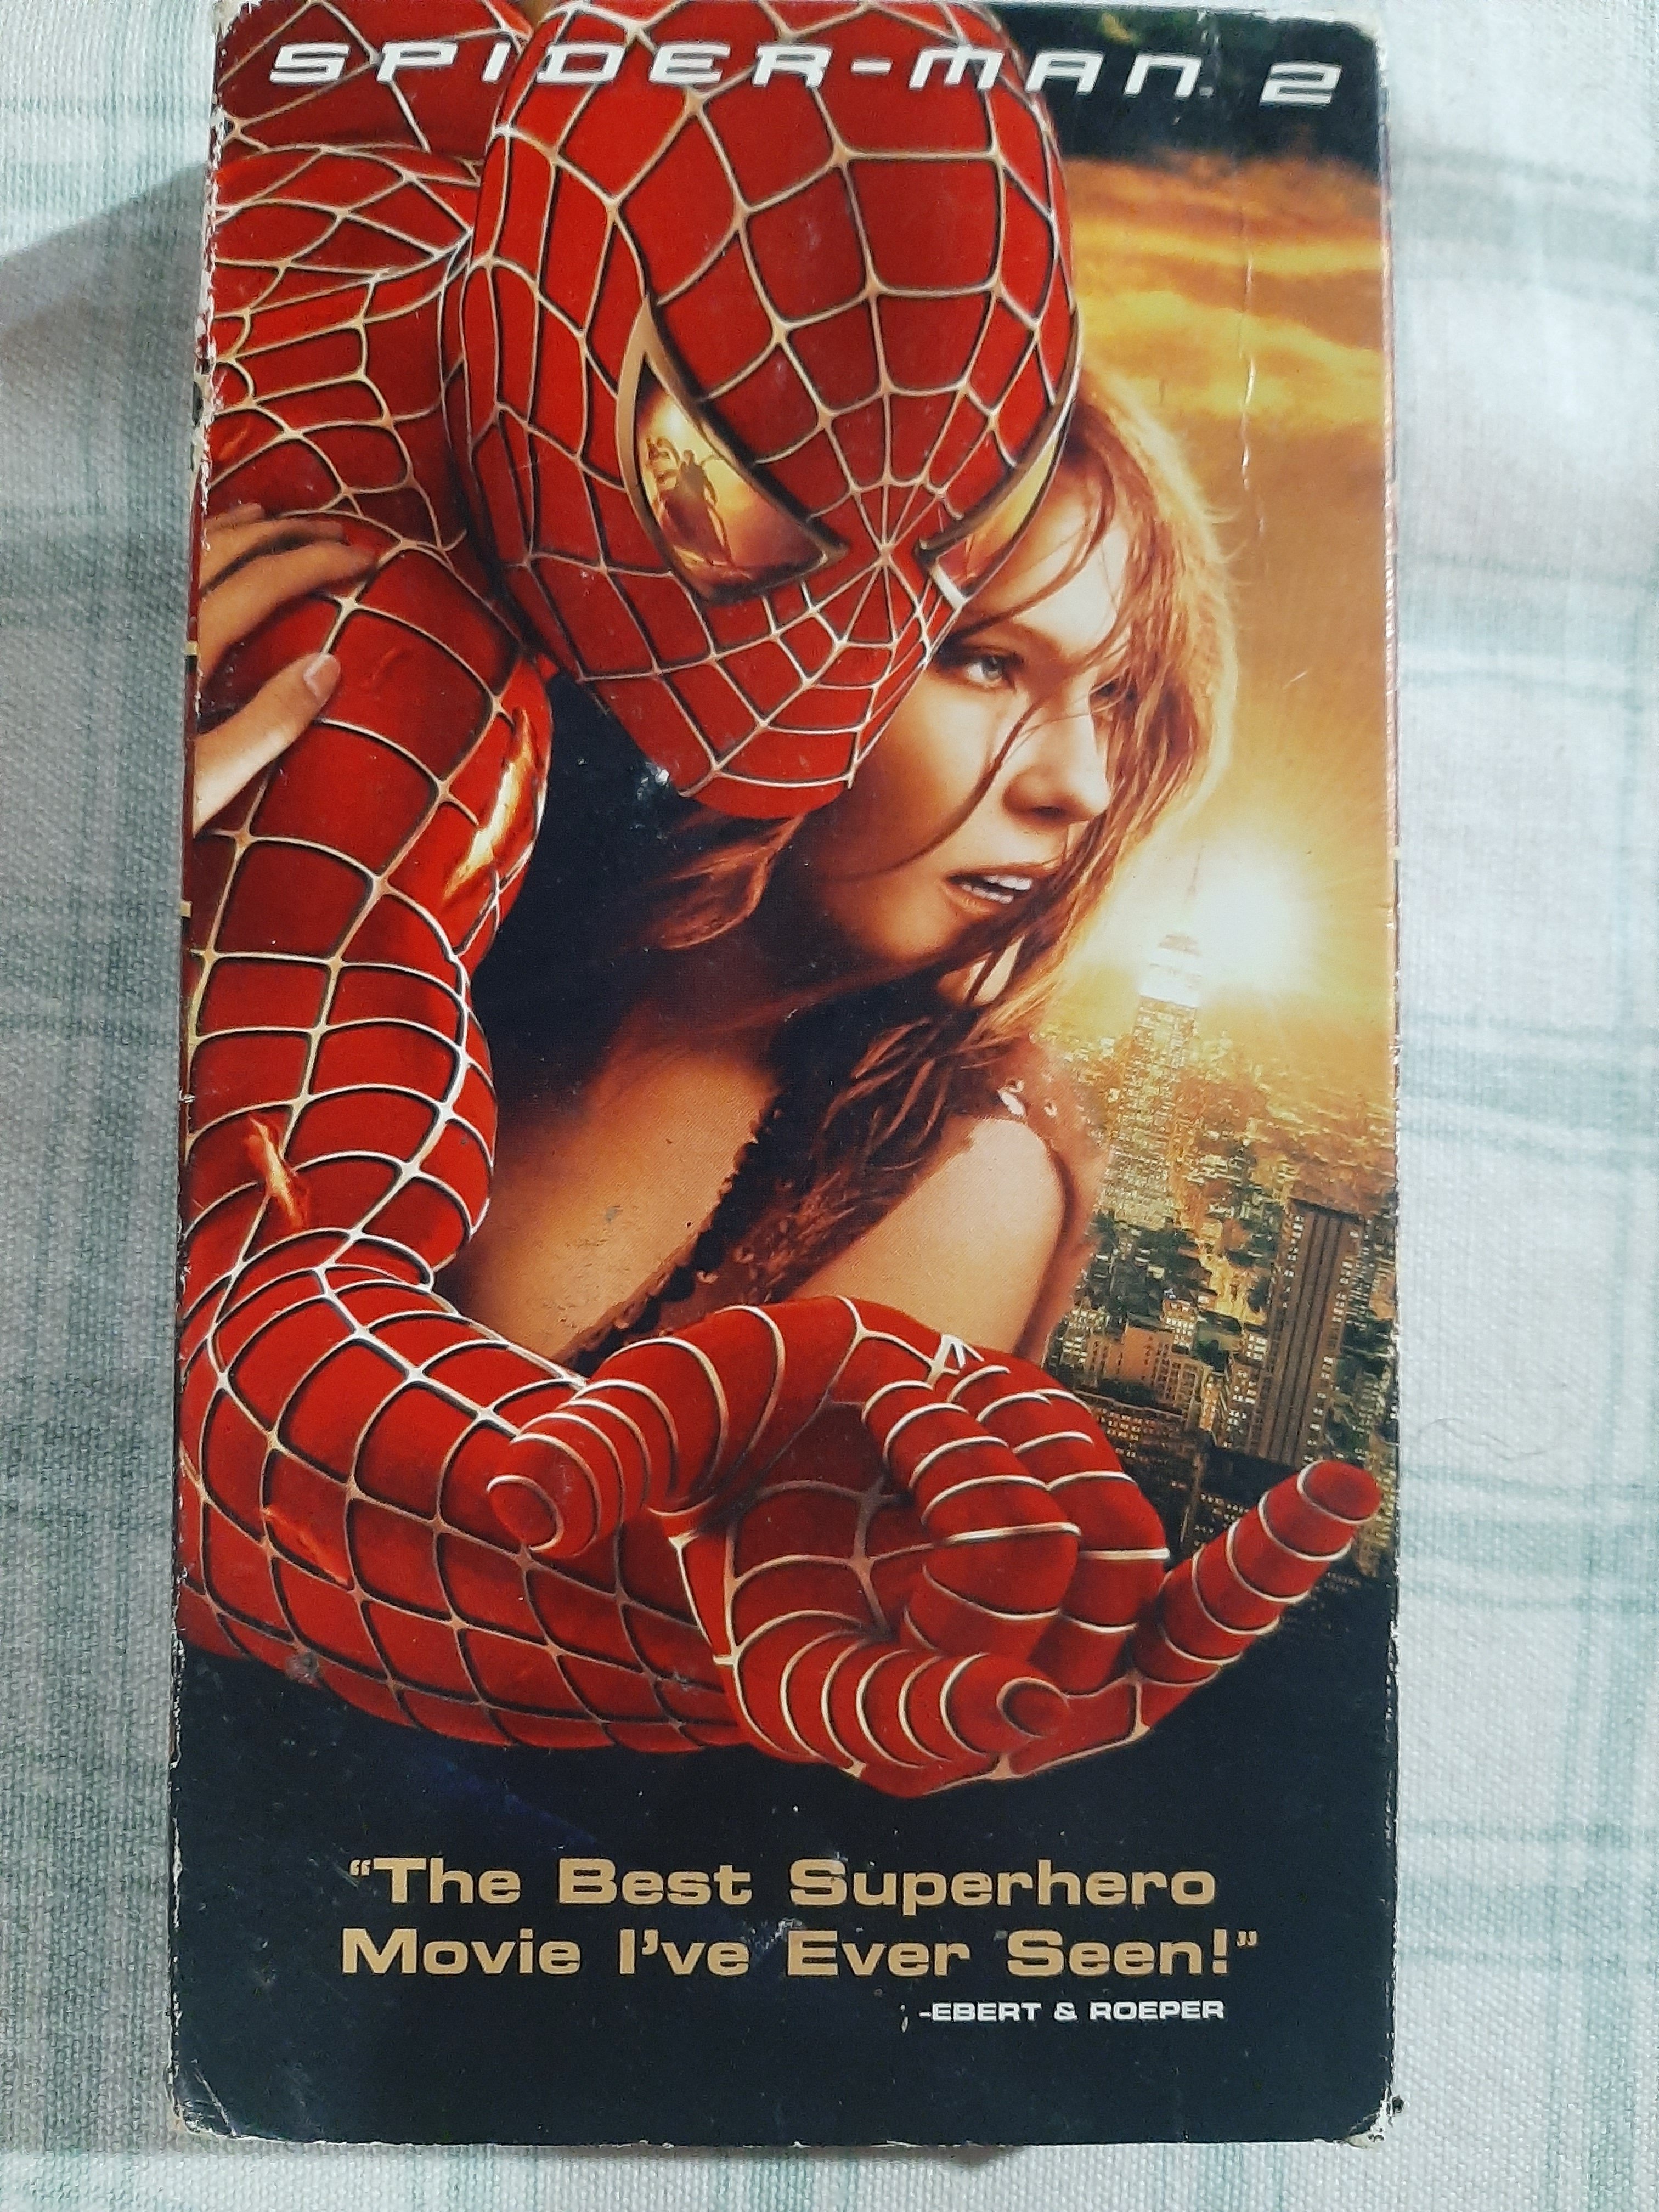 Spider-Man 2 DVD Release Date November 30, 2004